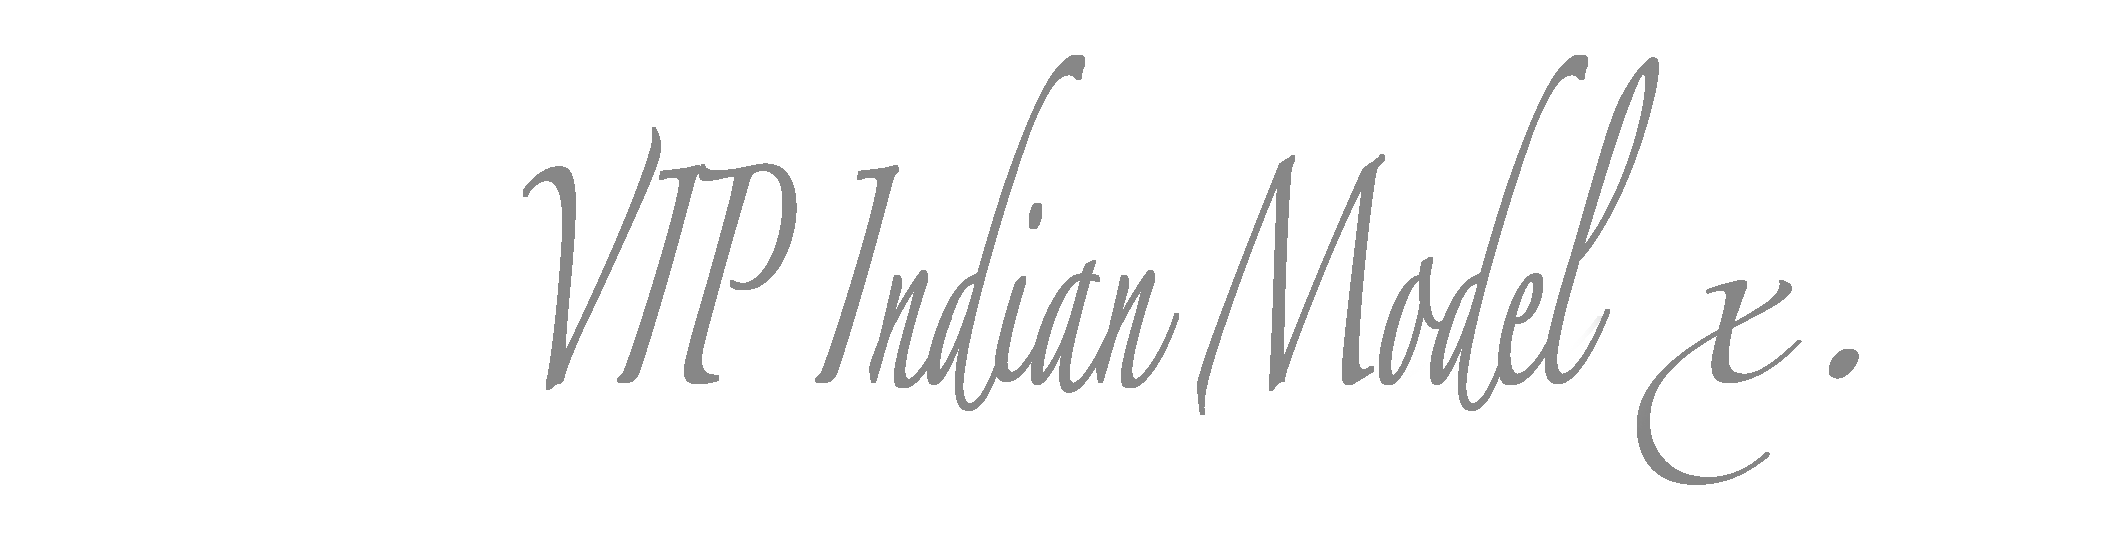 VIP Indian Model